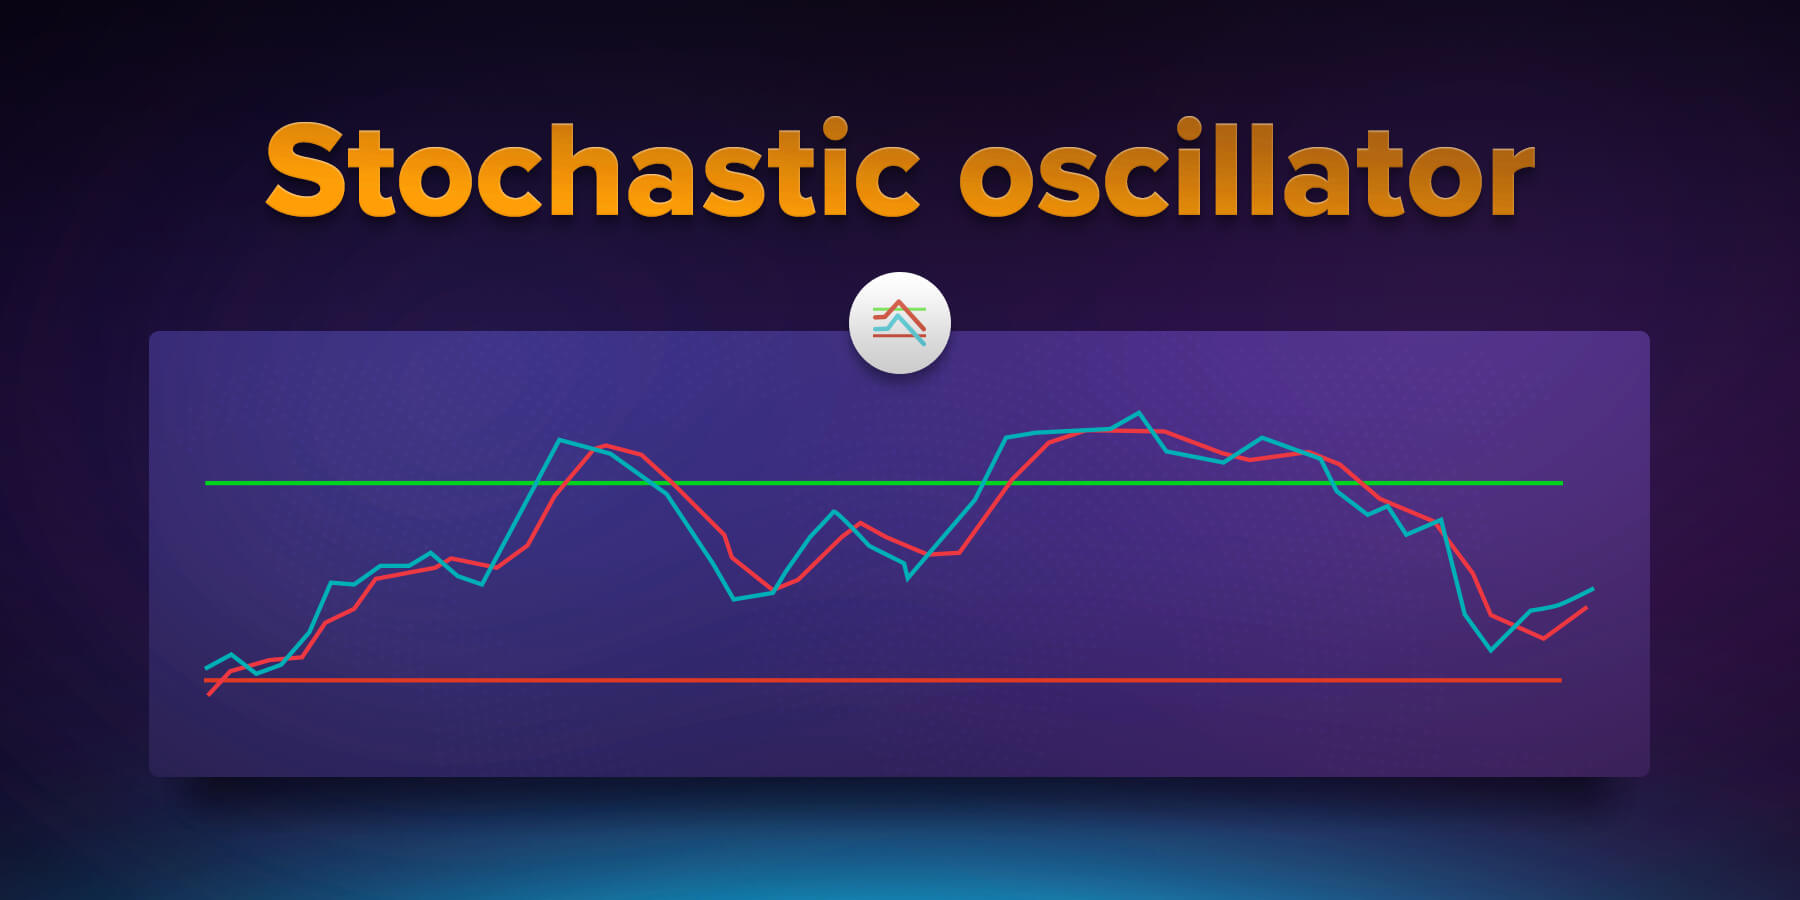 Stochastic Oscillator (SO)